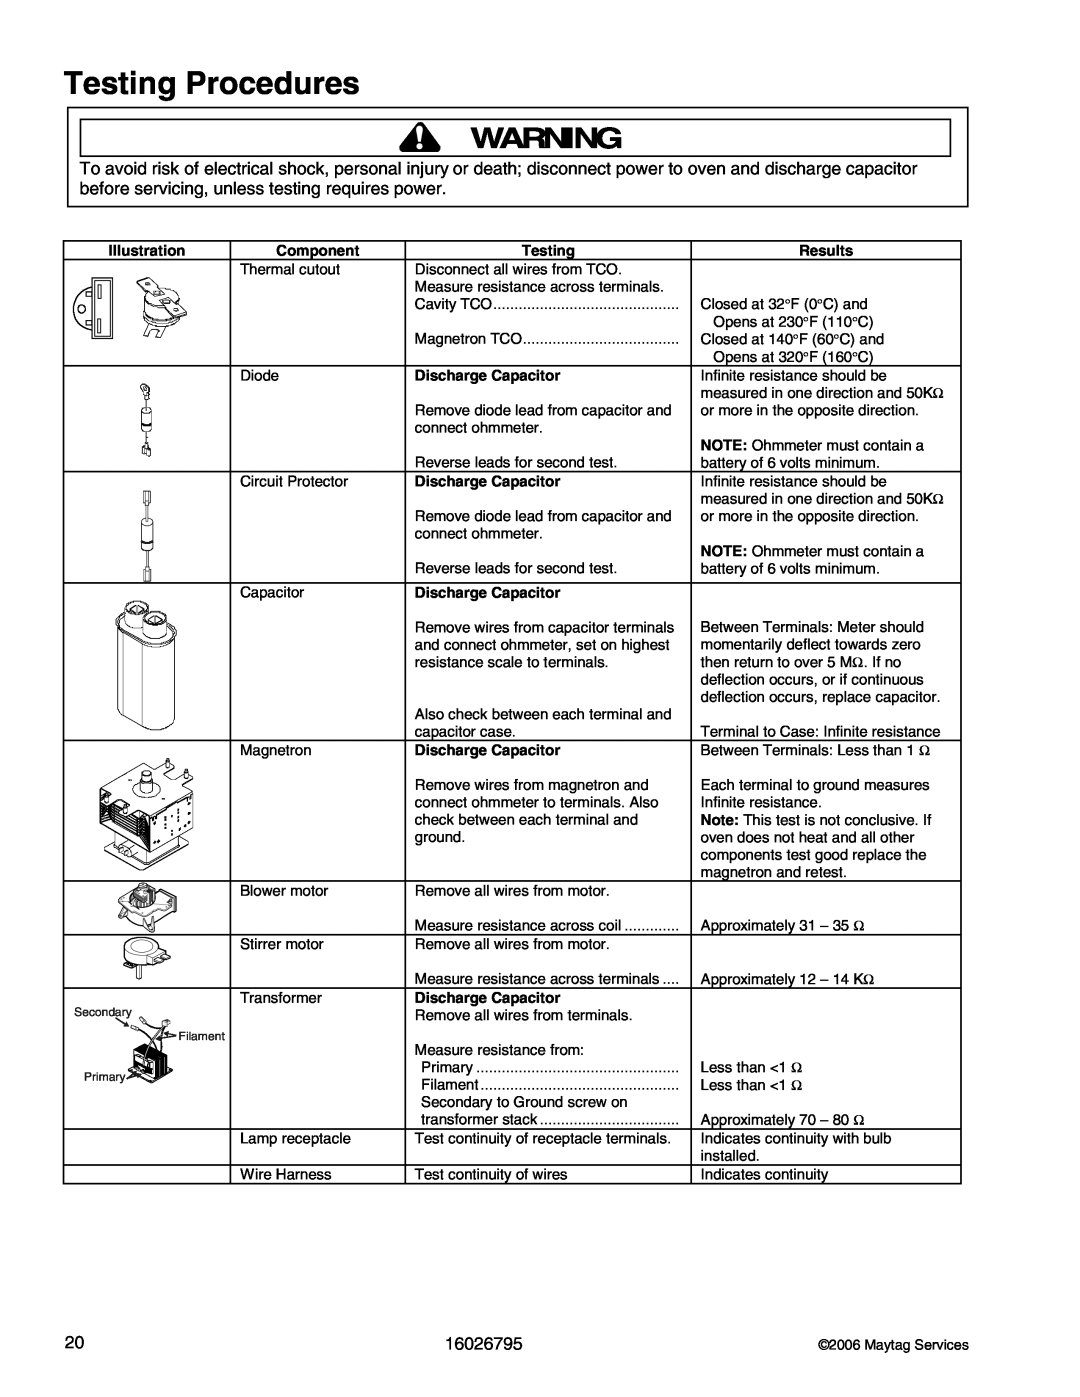 Maytag 1800 W - 2005 manual Testing Procedures, Filament 